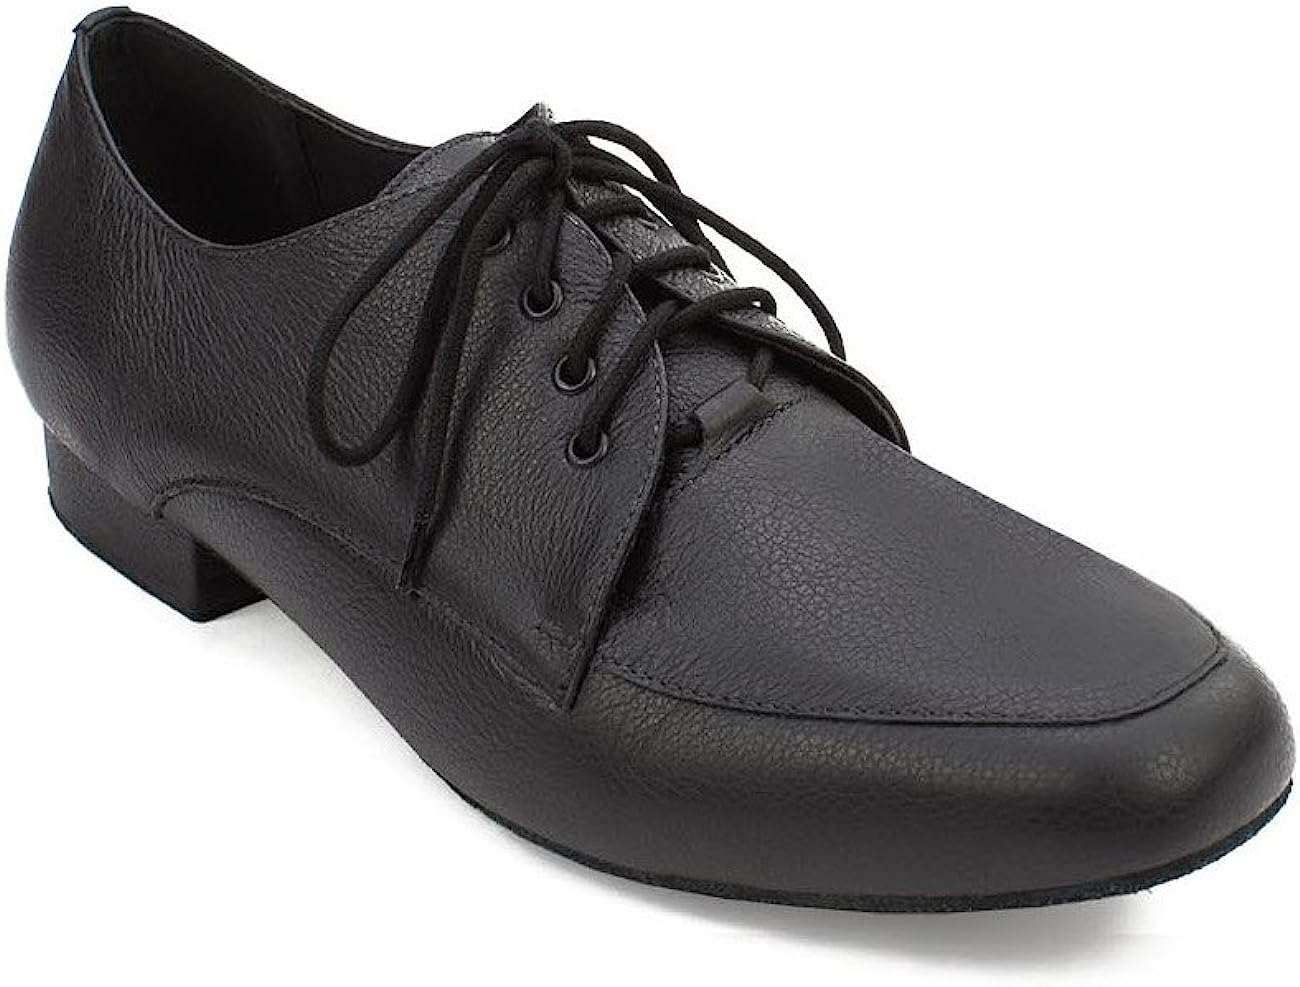 Men's Classic Leather Ballroom Shoe